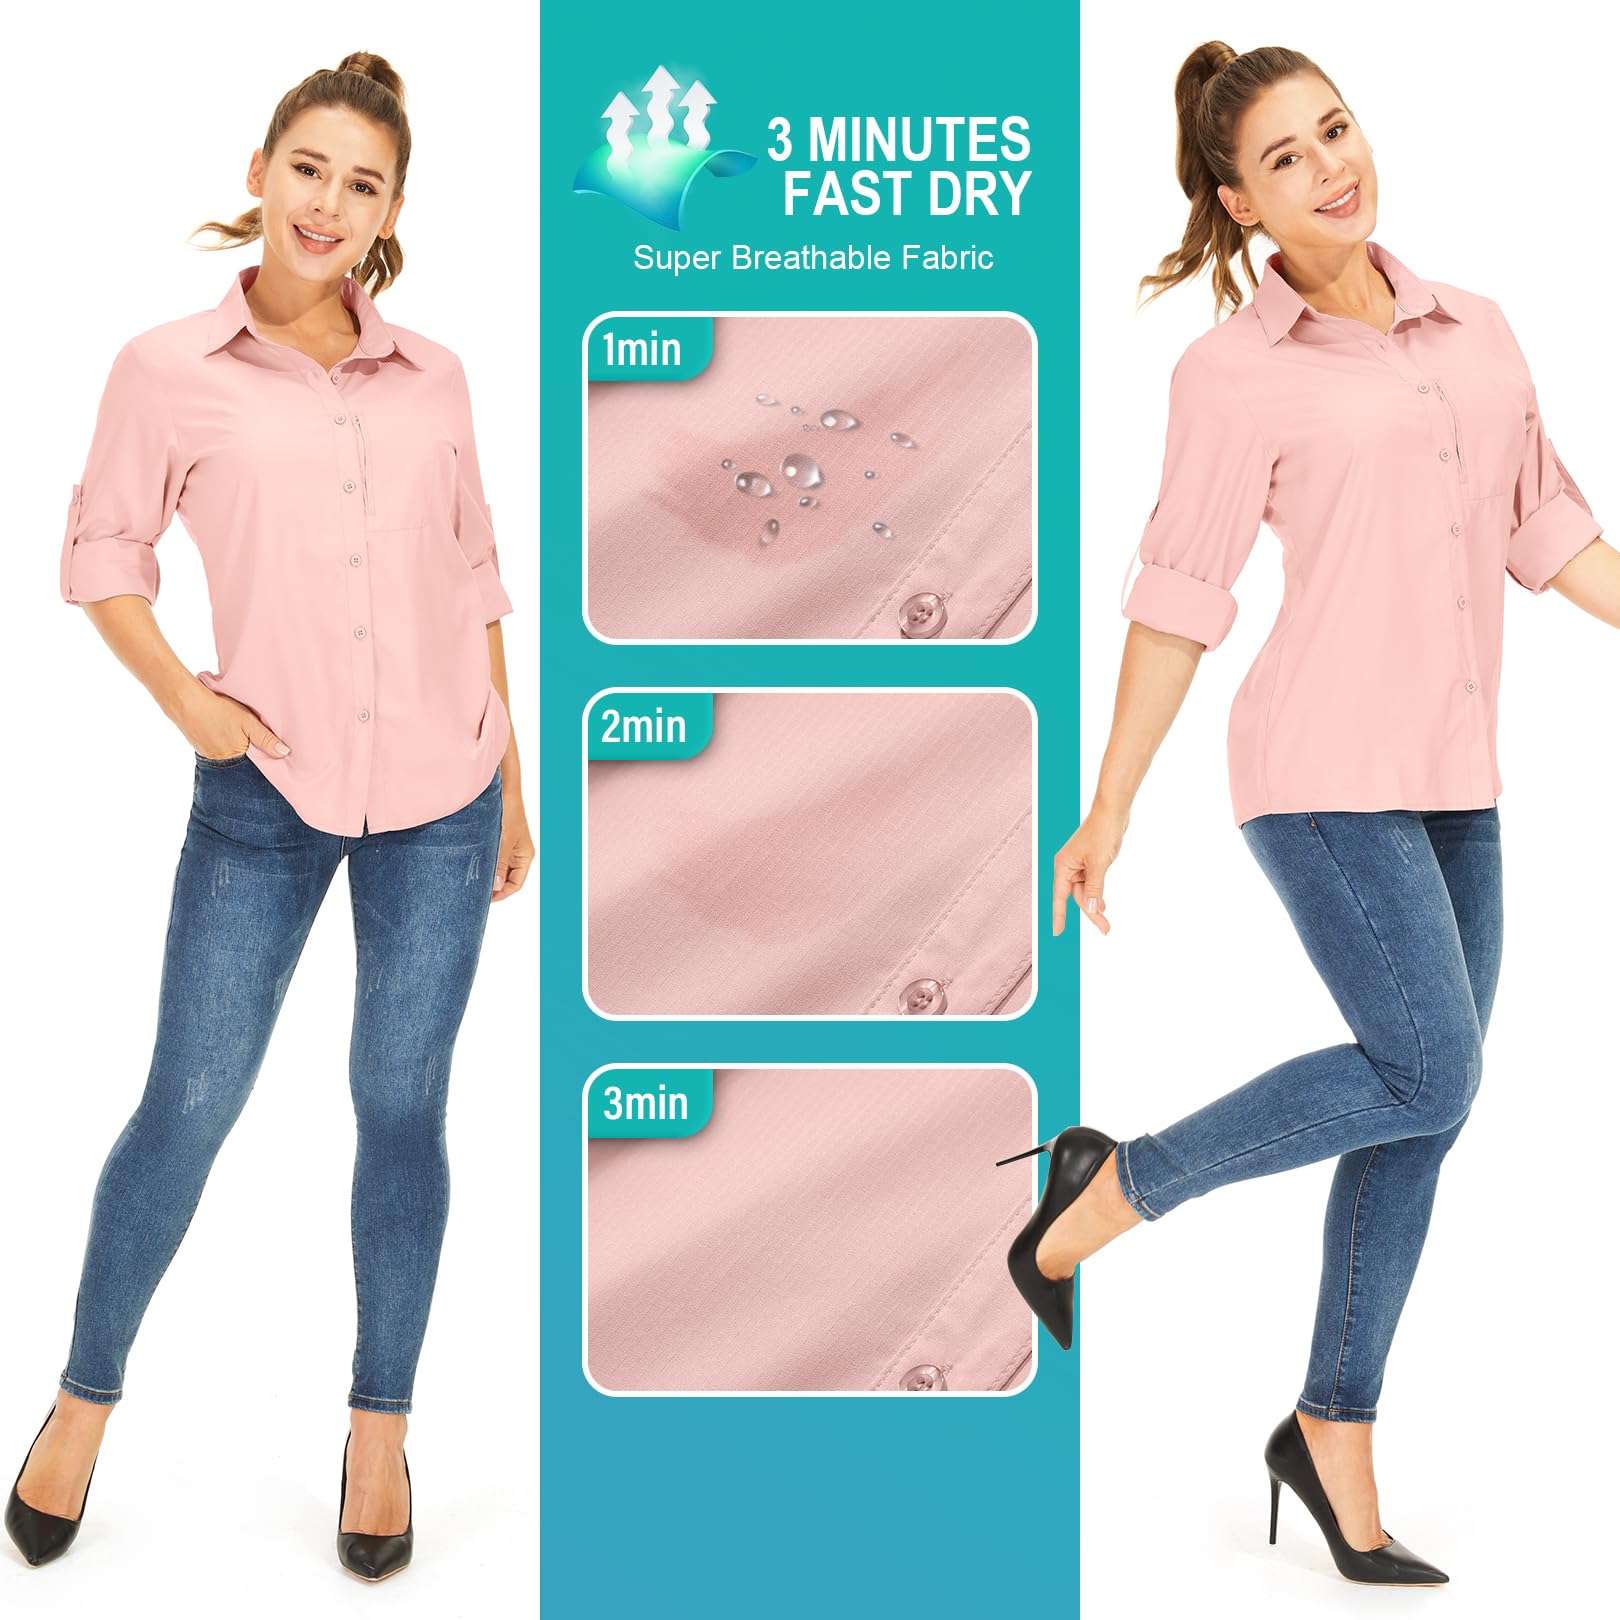 Women's Long Sleeve Safari Clothes UPF 50+ Hiking Fishing Shirts,Sun Protection Quick Dry Light Cooling Shirts(5019 Pink L)